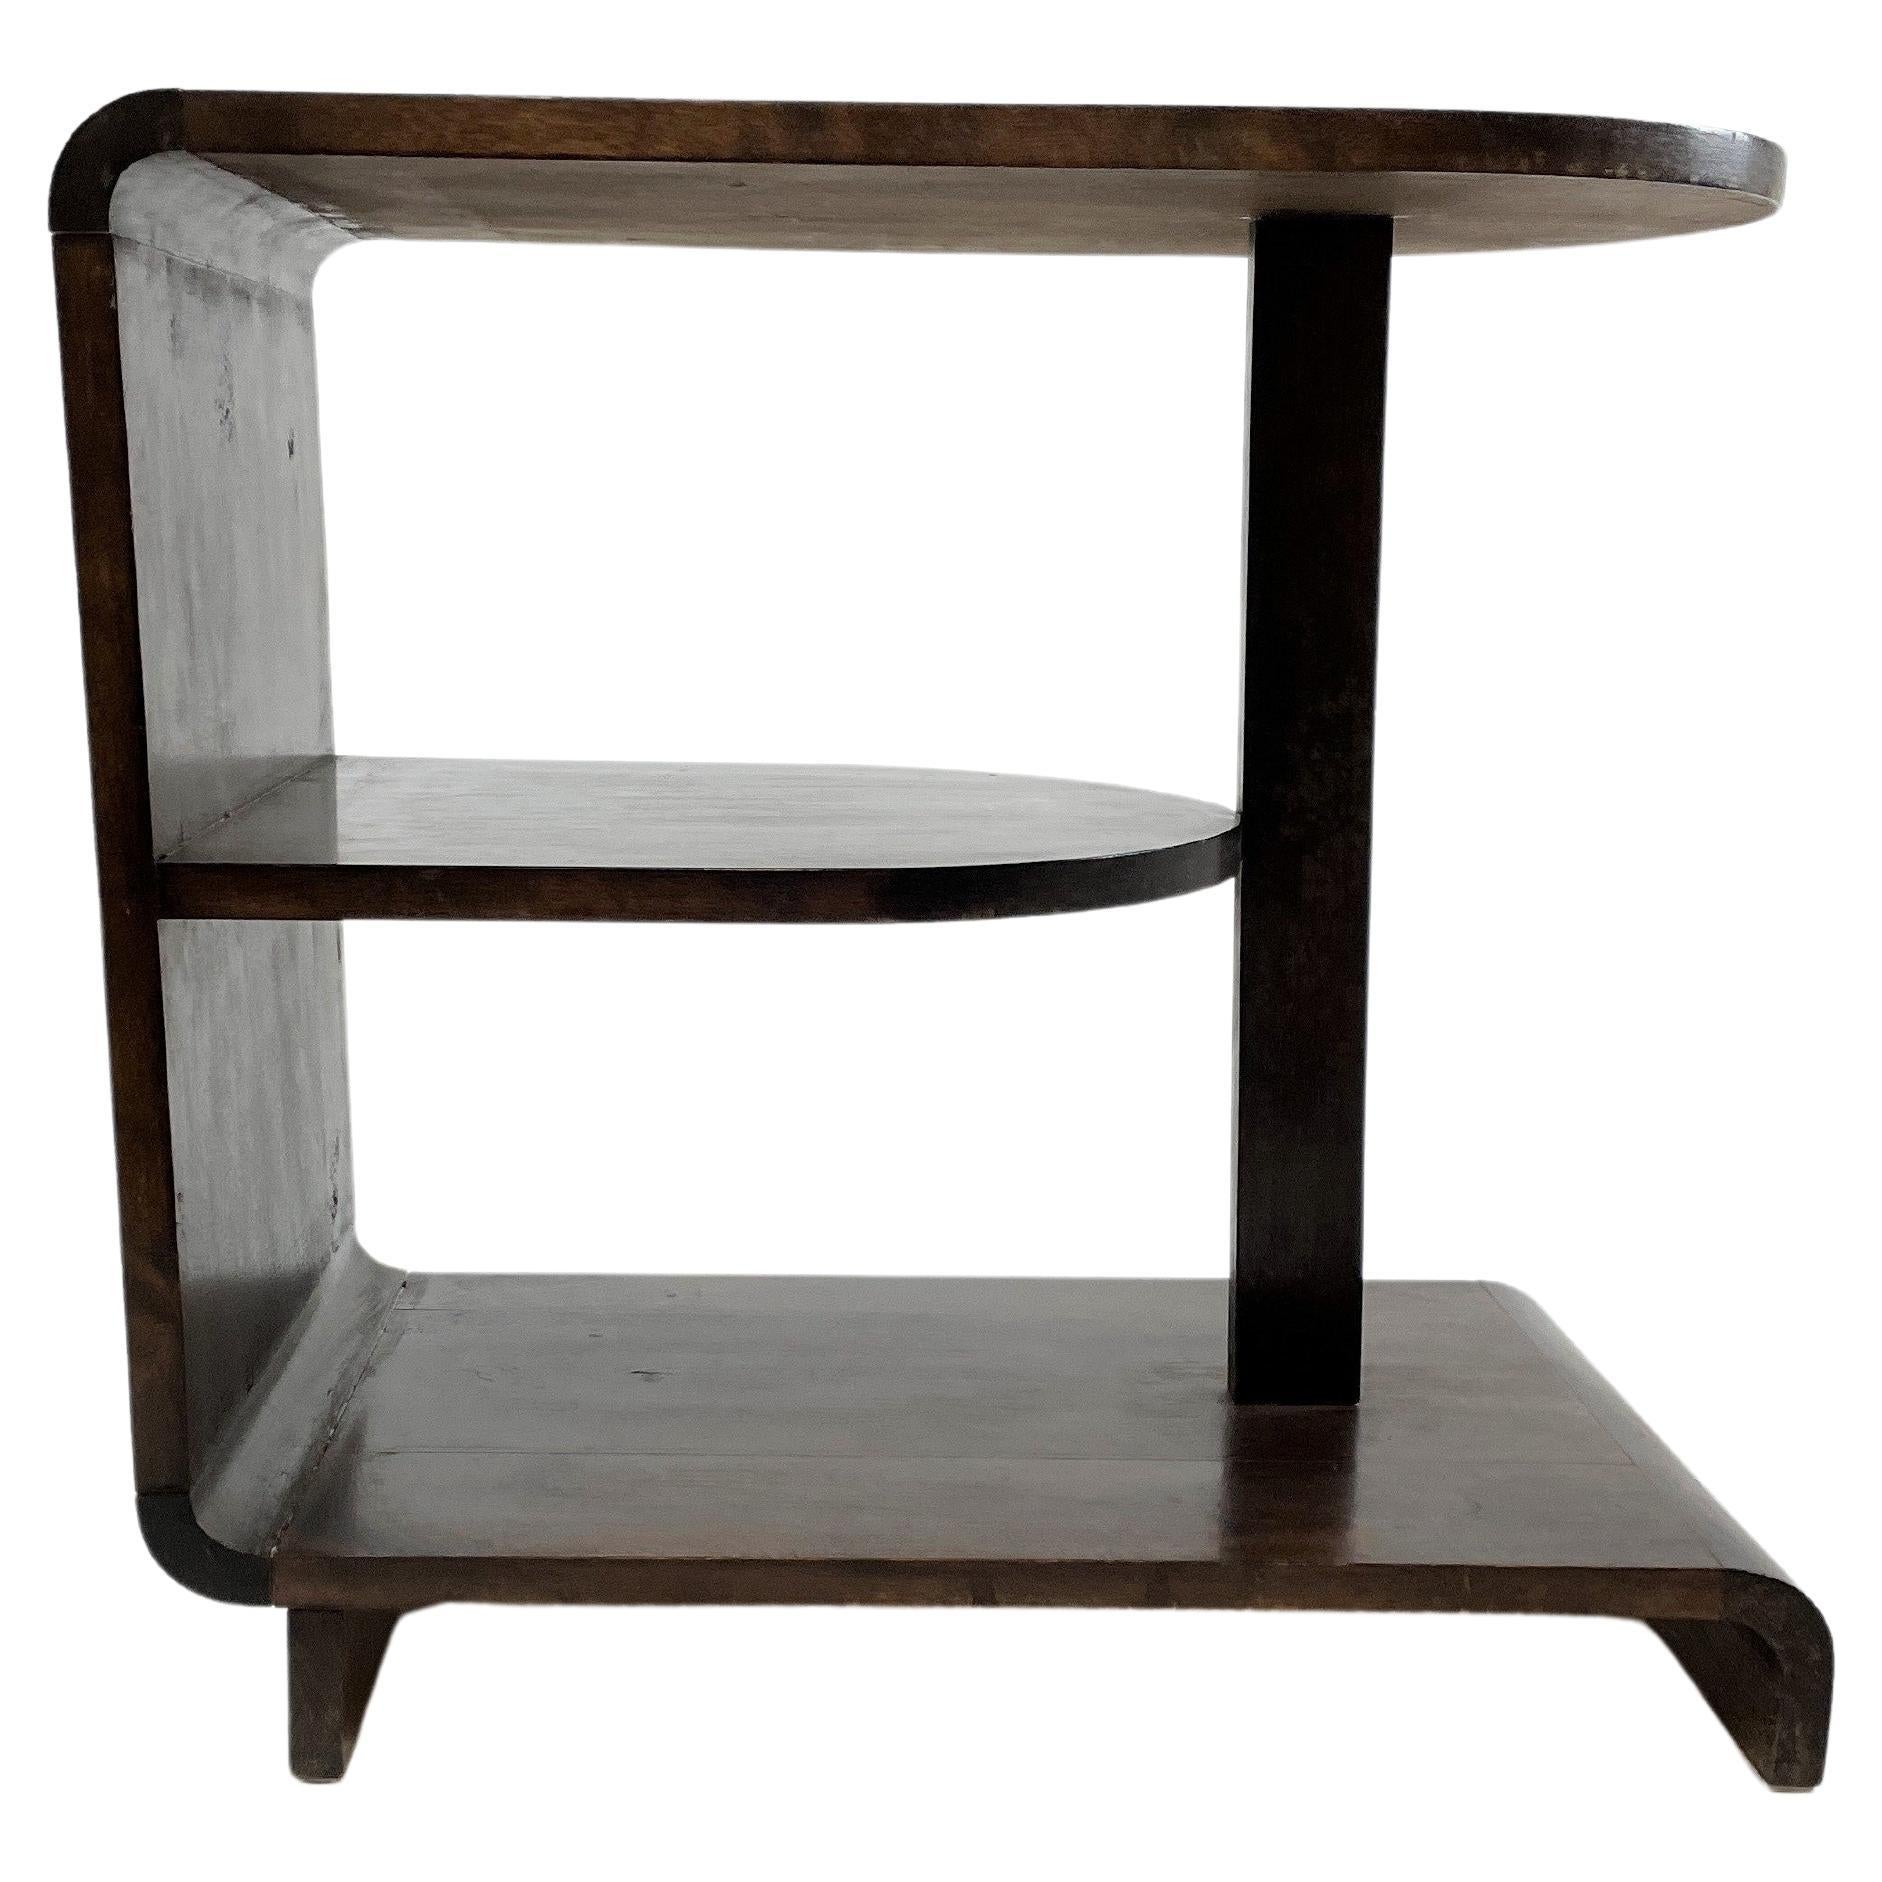 Finnish Modern Apu 604 Side Table by Maija Heikinheimo for Asko, 1930s For Sale